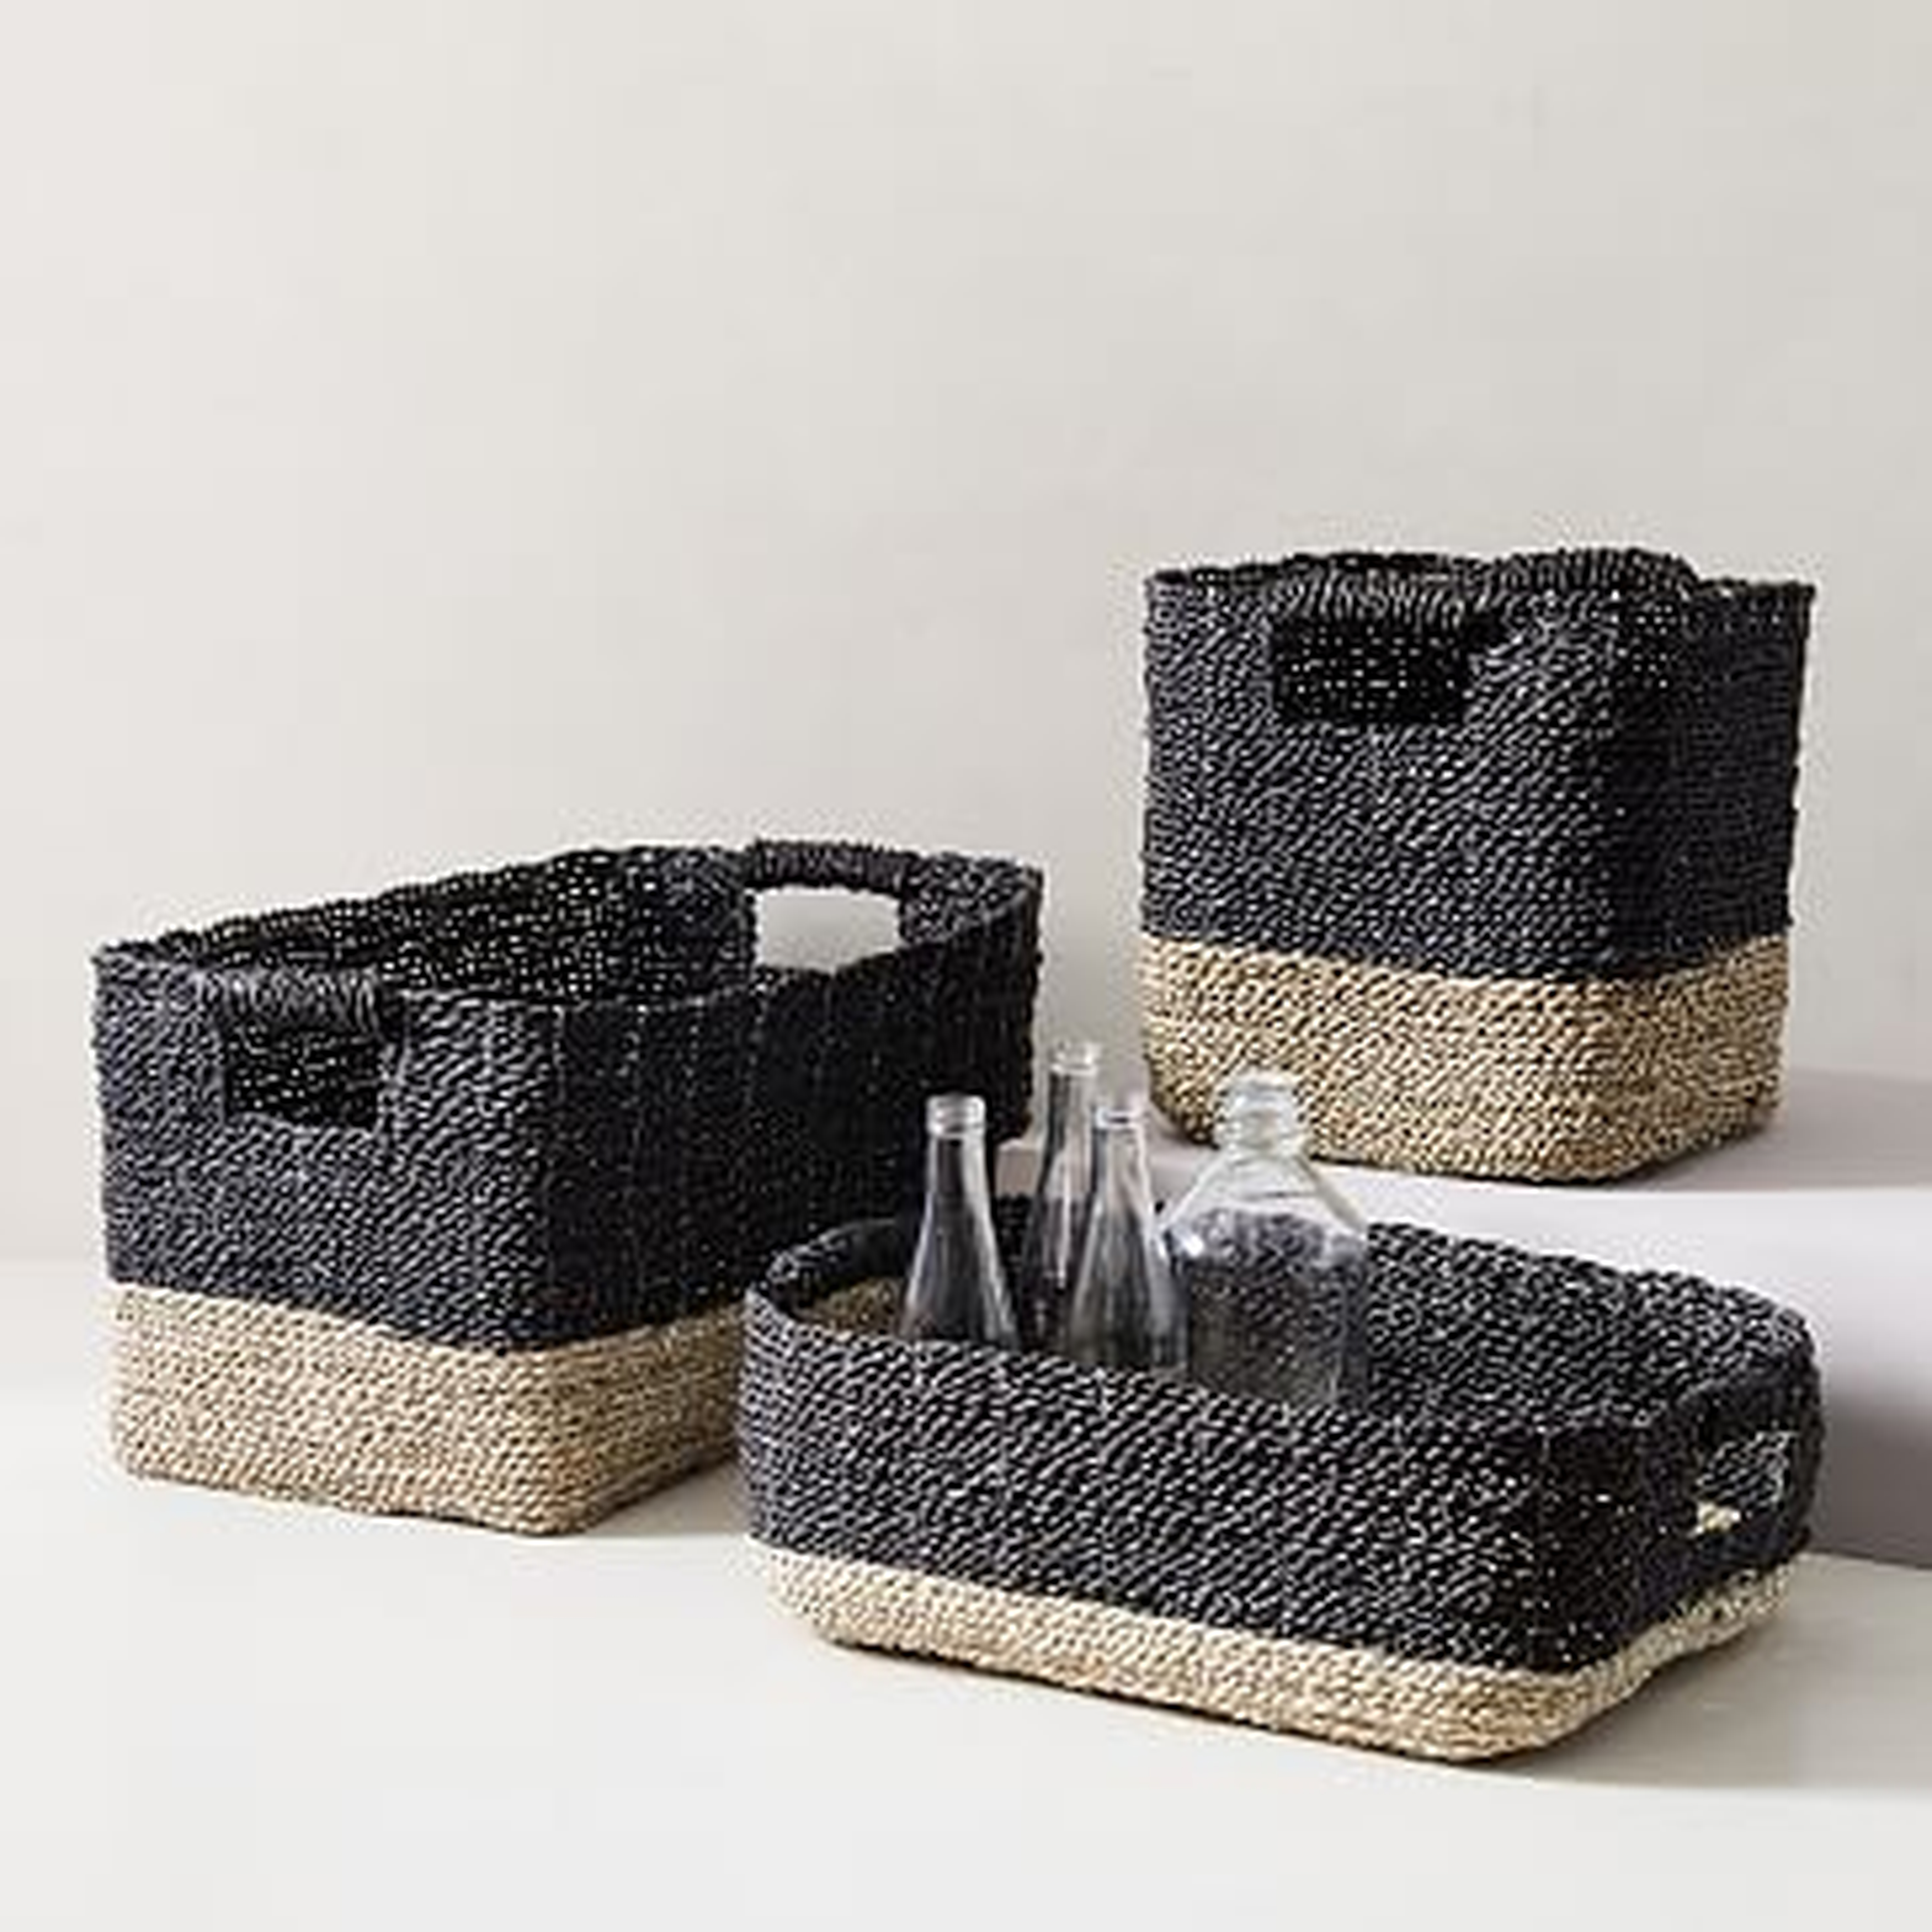 Two-Tone Woven Storage Basket, Black/Tan Underbed - West Elm